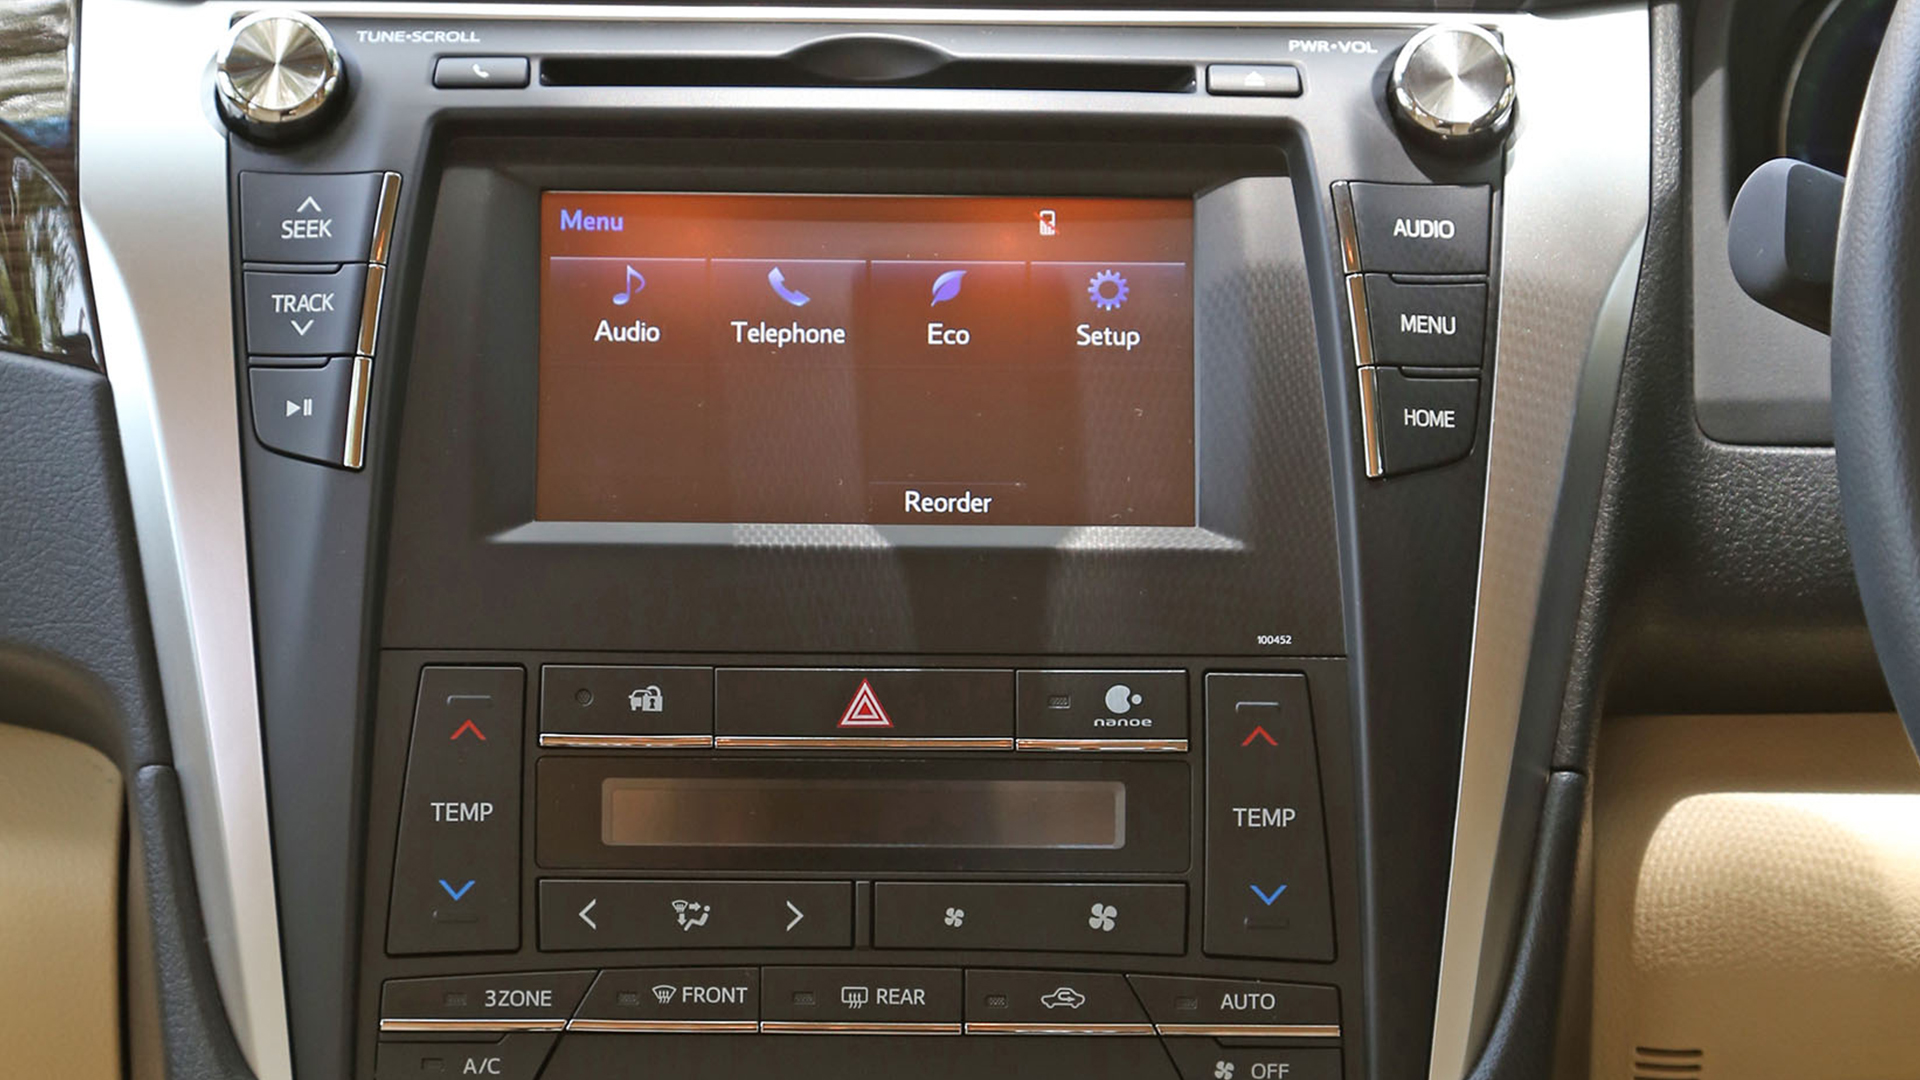 Toyota Camry 2015 Hybrid Interior